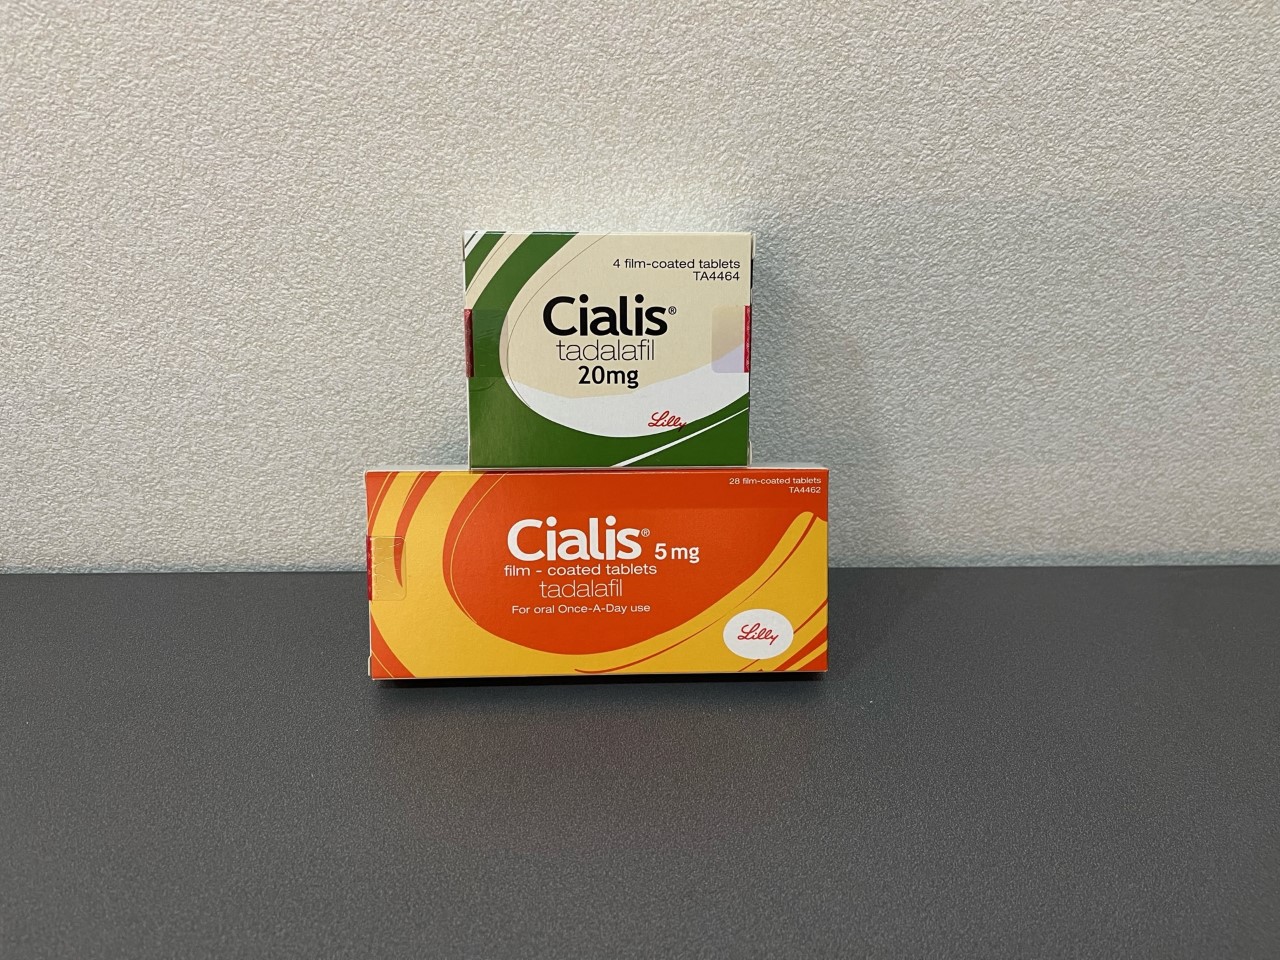 Cialis (Tadalafil) Singapore - Oral Erectile Dysfunction (ED) Treatment, PULSE CLINIC Singapore